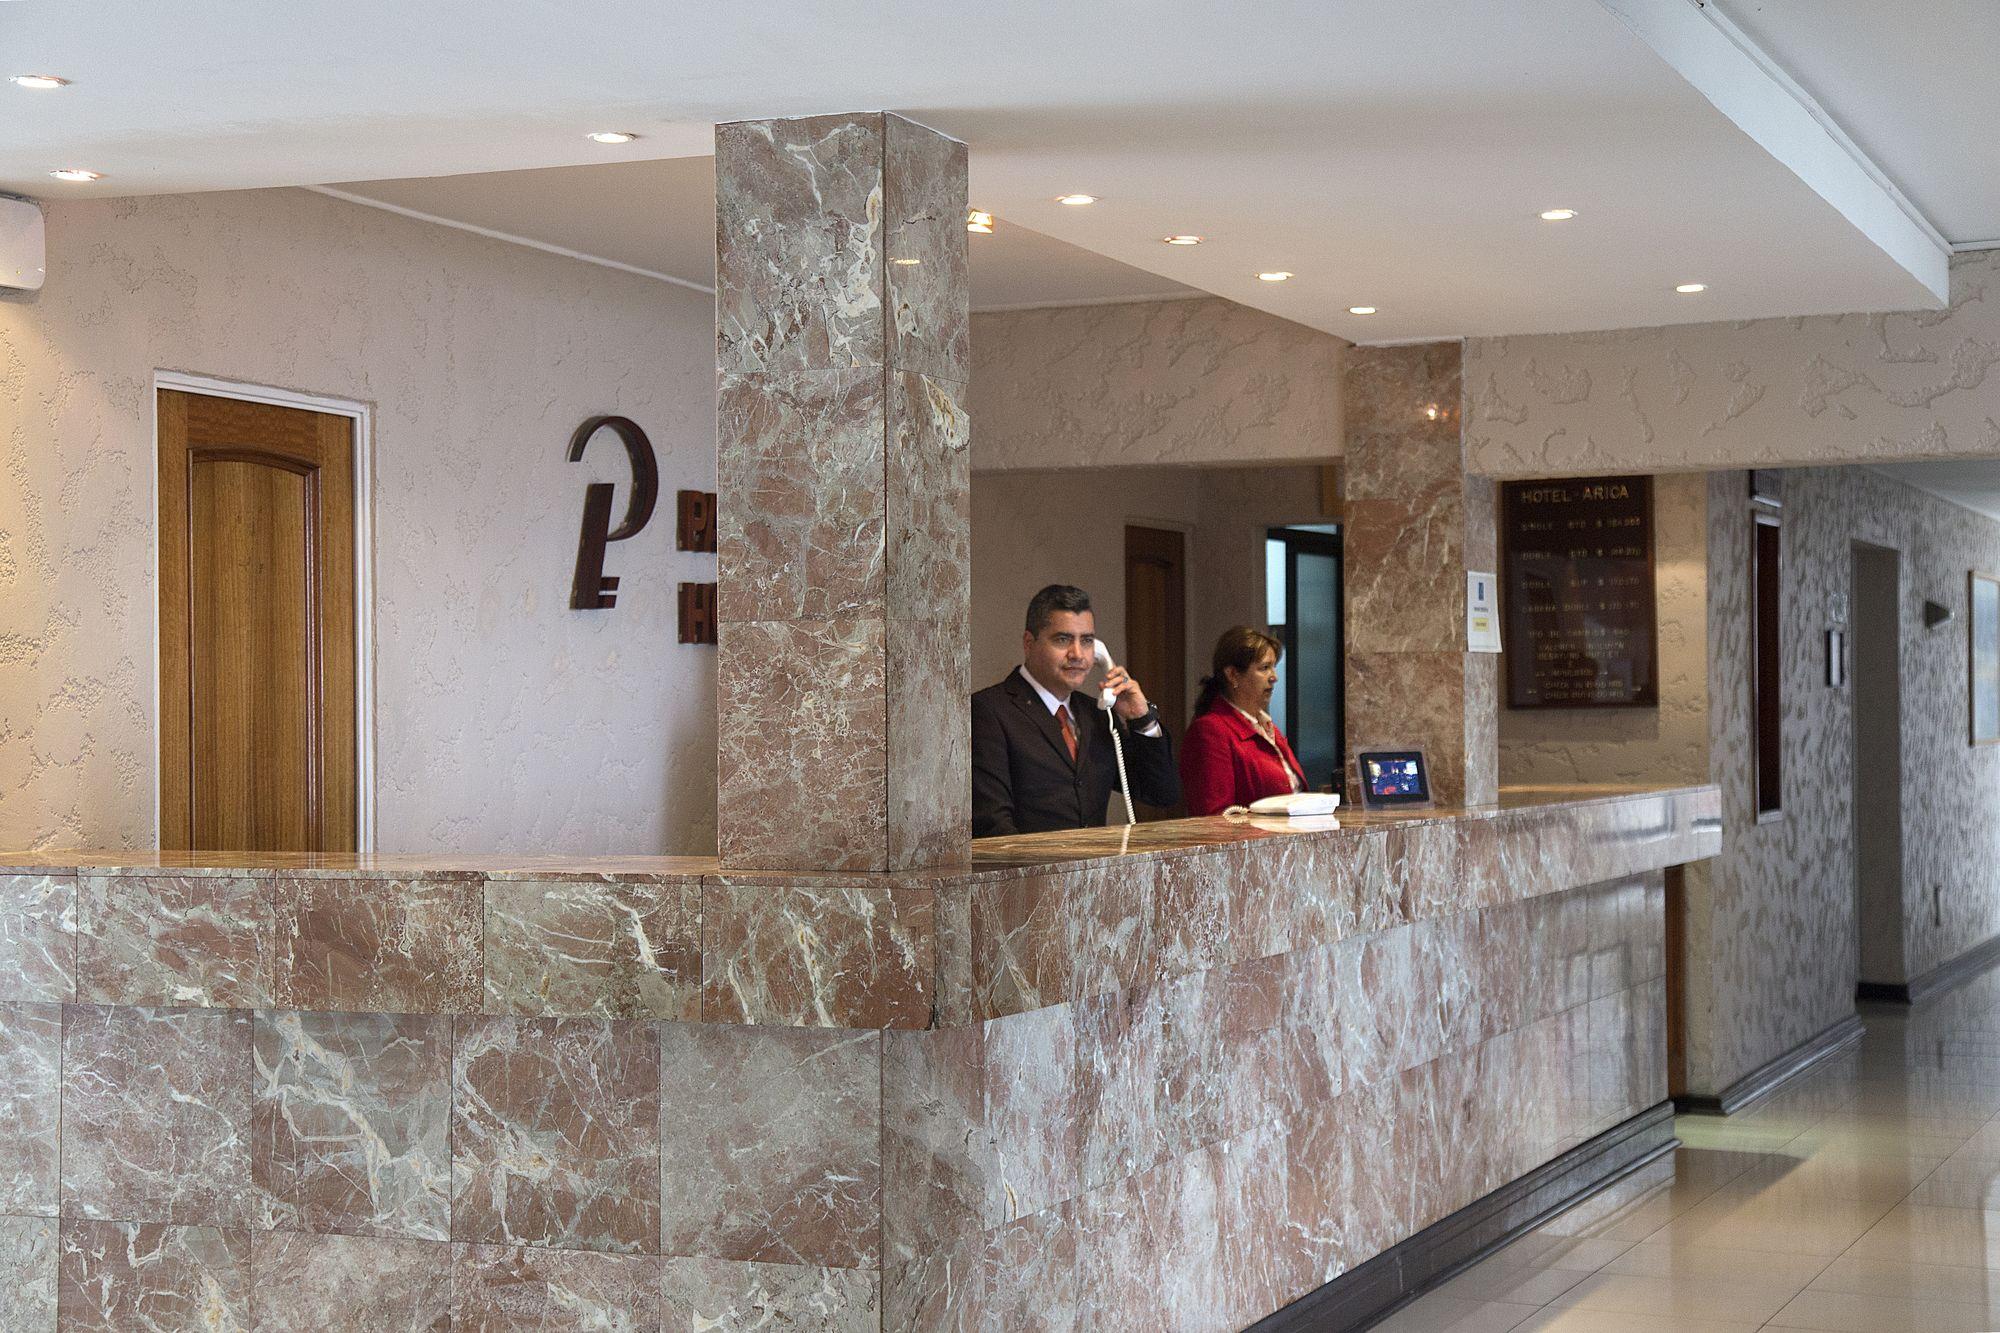 Vista Lobby Panamericana Hotel - Arica